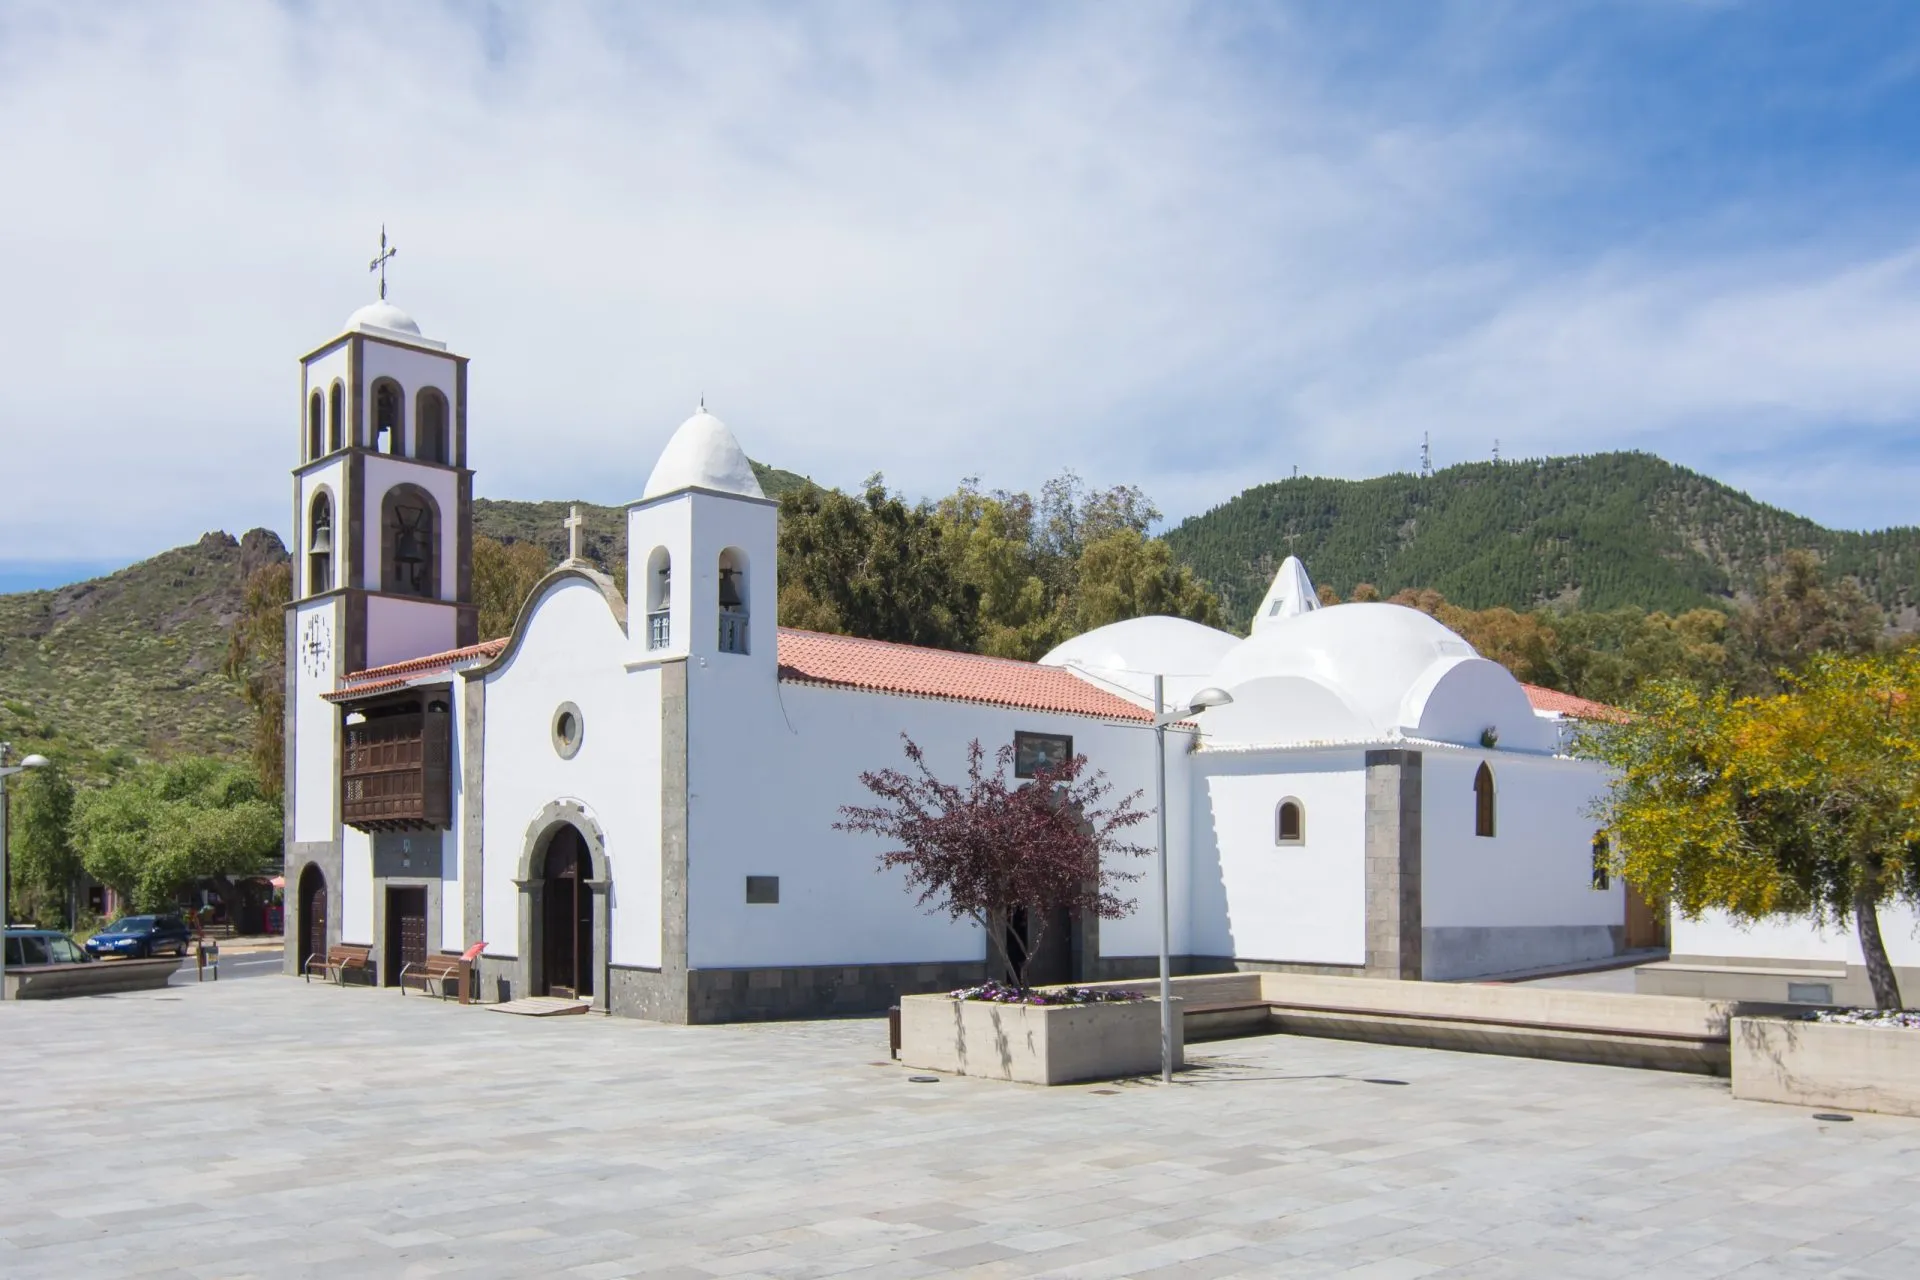 Iglesia (kyrka) de San Fernando Rey i Santiago del Teide, Teneriffa, Kanarieöarna, Spanien